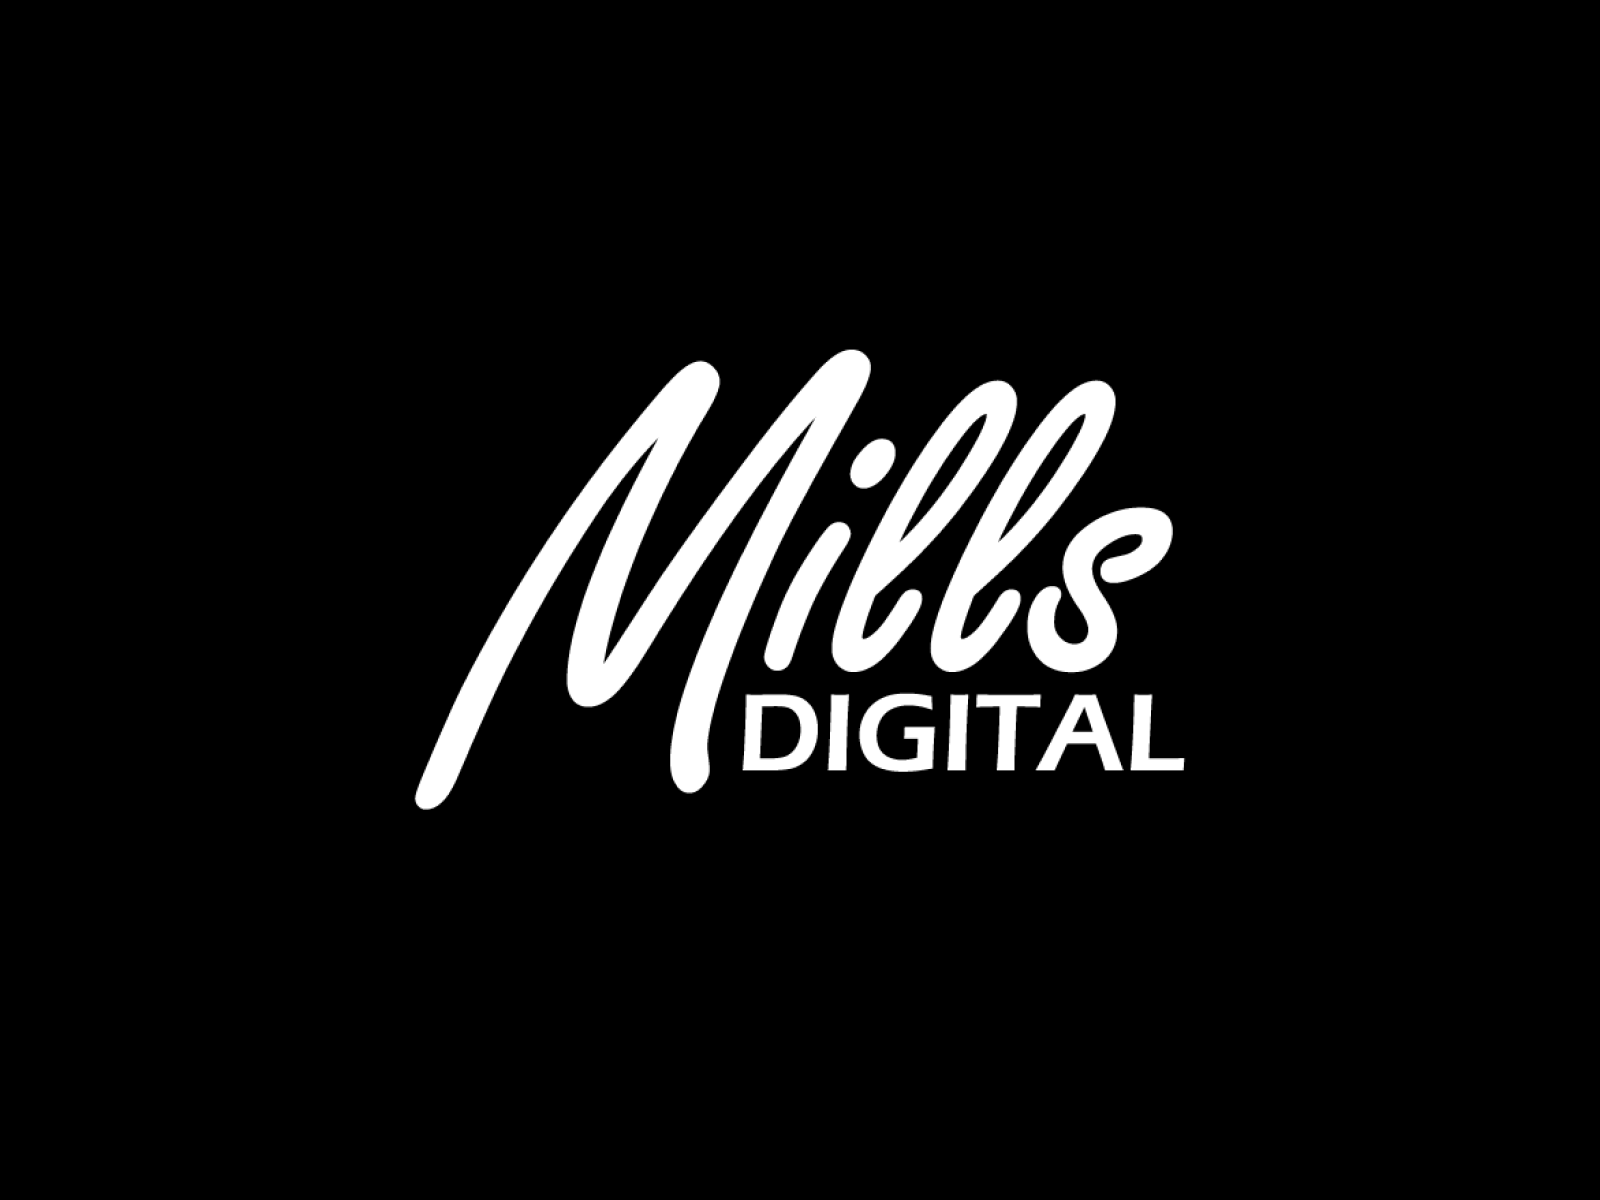 Mills Digital Brand - Digital Agency by Hayden Mills on Dribbble